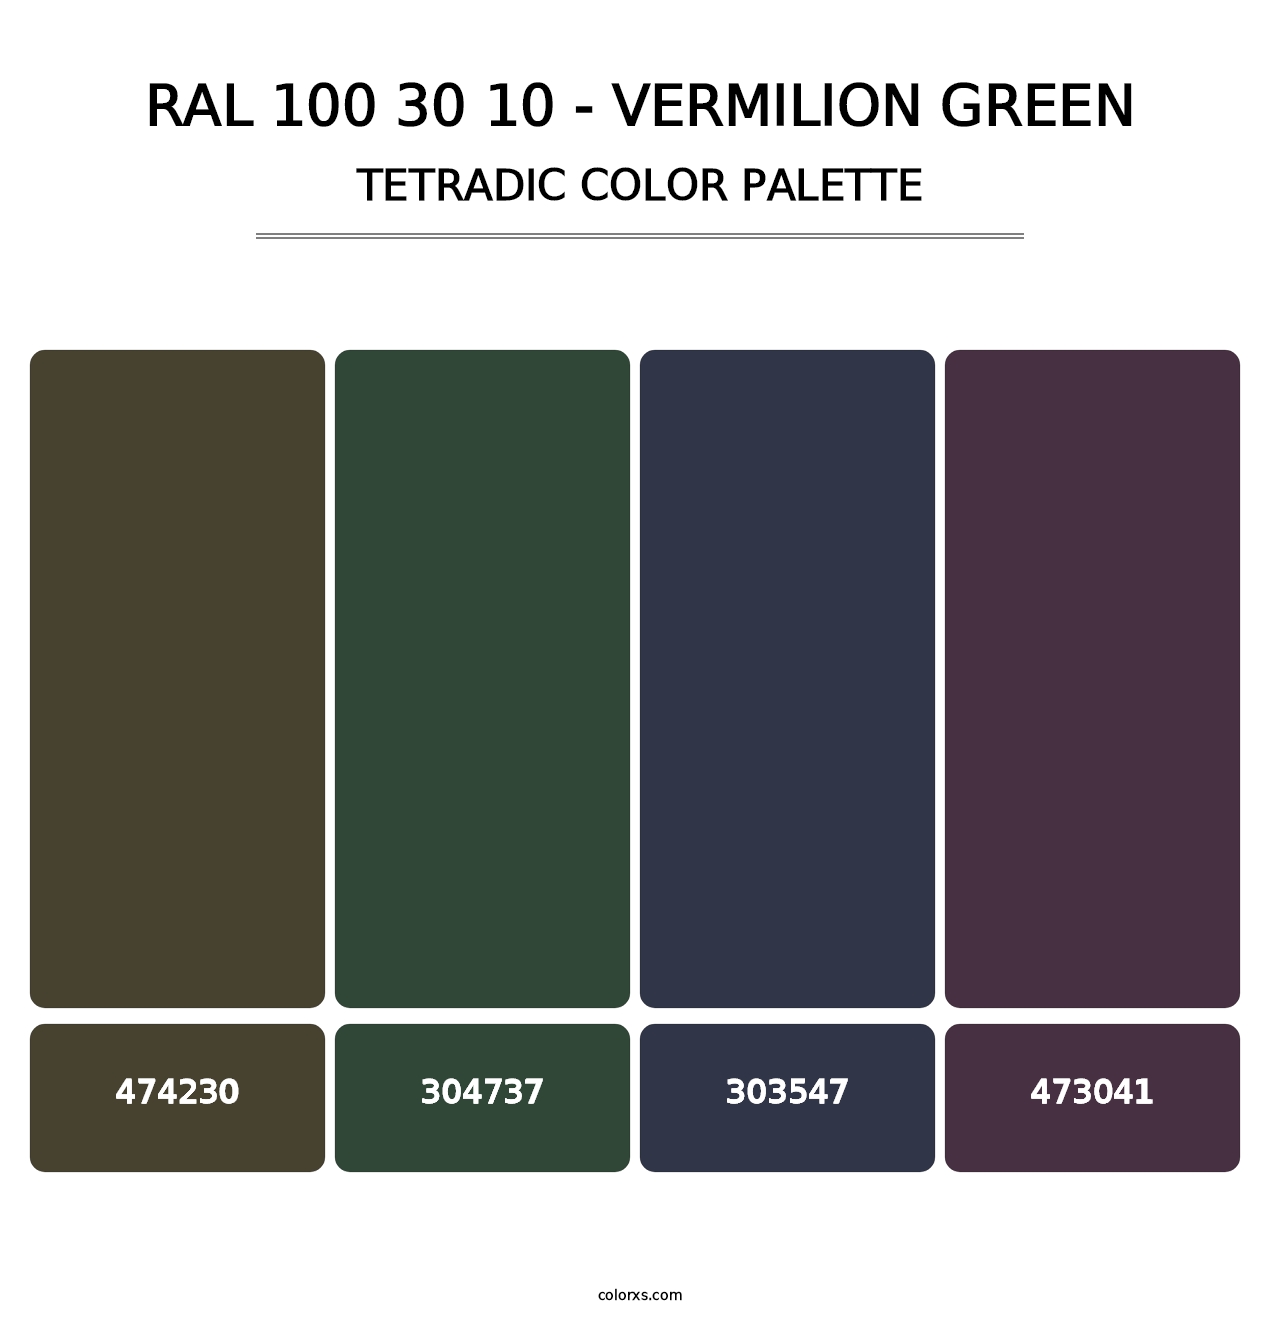 RAL 100 30 10 - Vermilion Green - Tetradic Color Palette